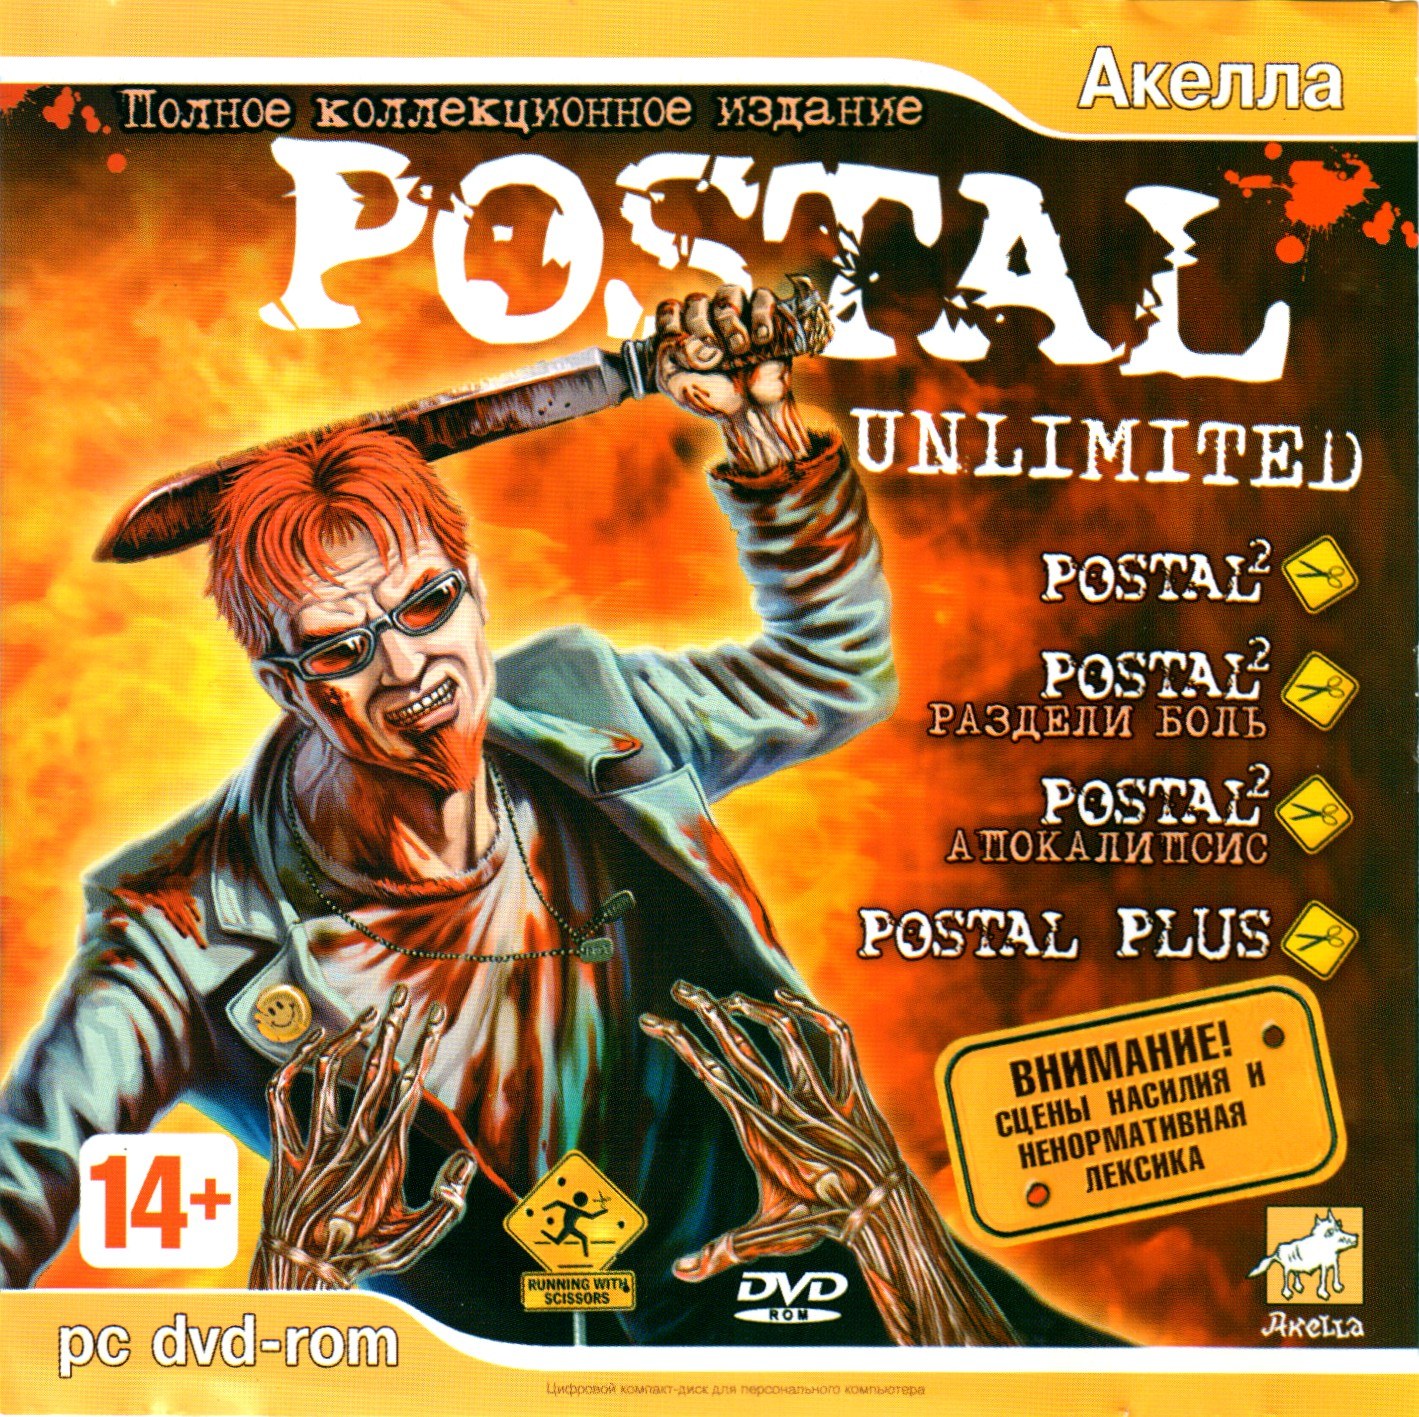 Postal 2 awp torrent magnet фото 42